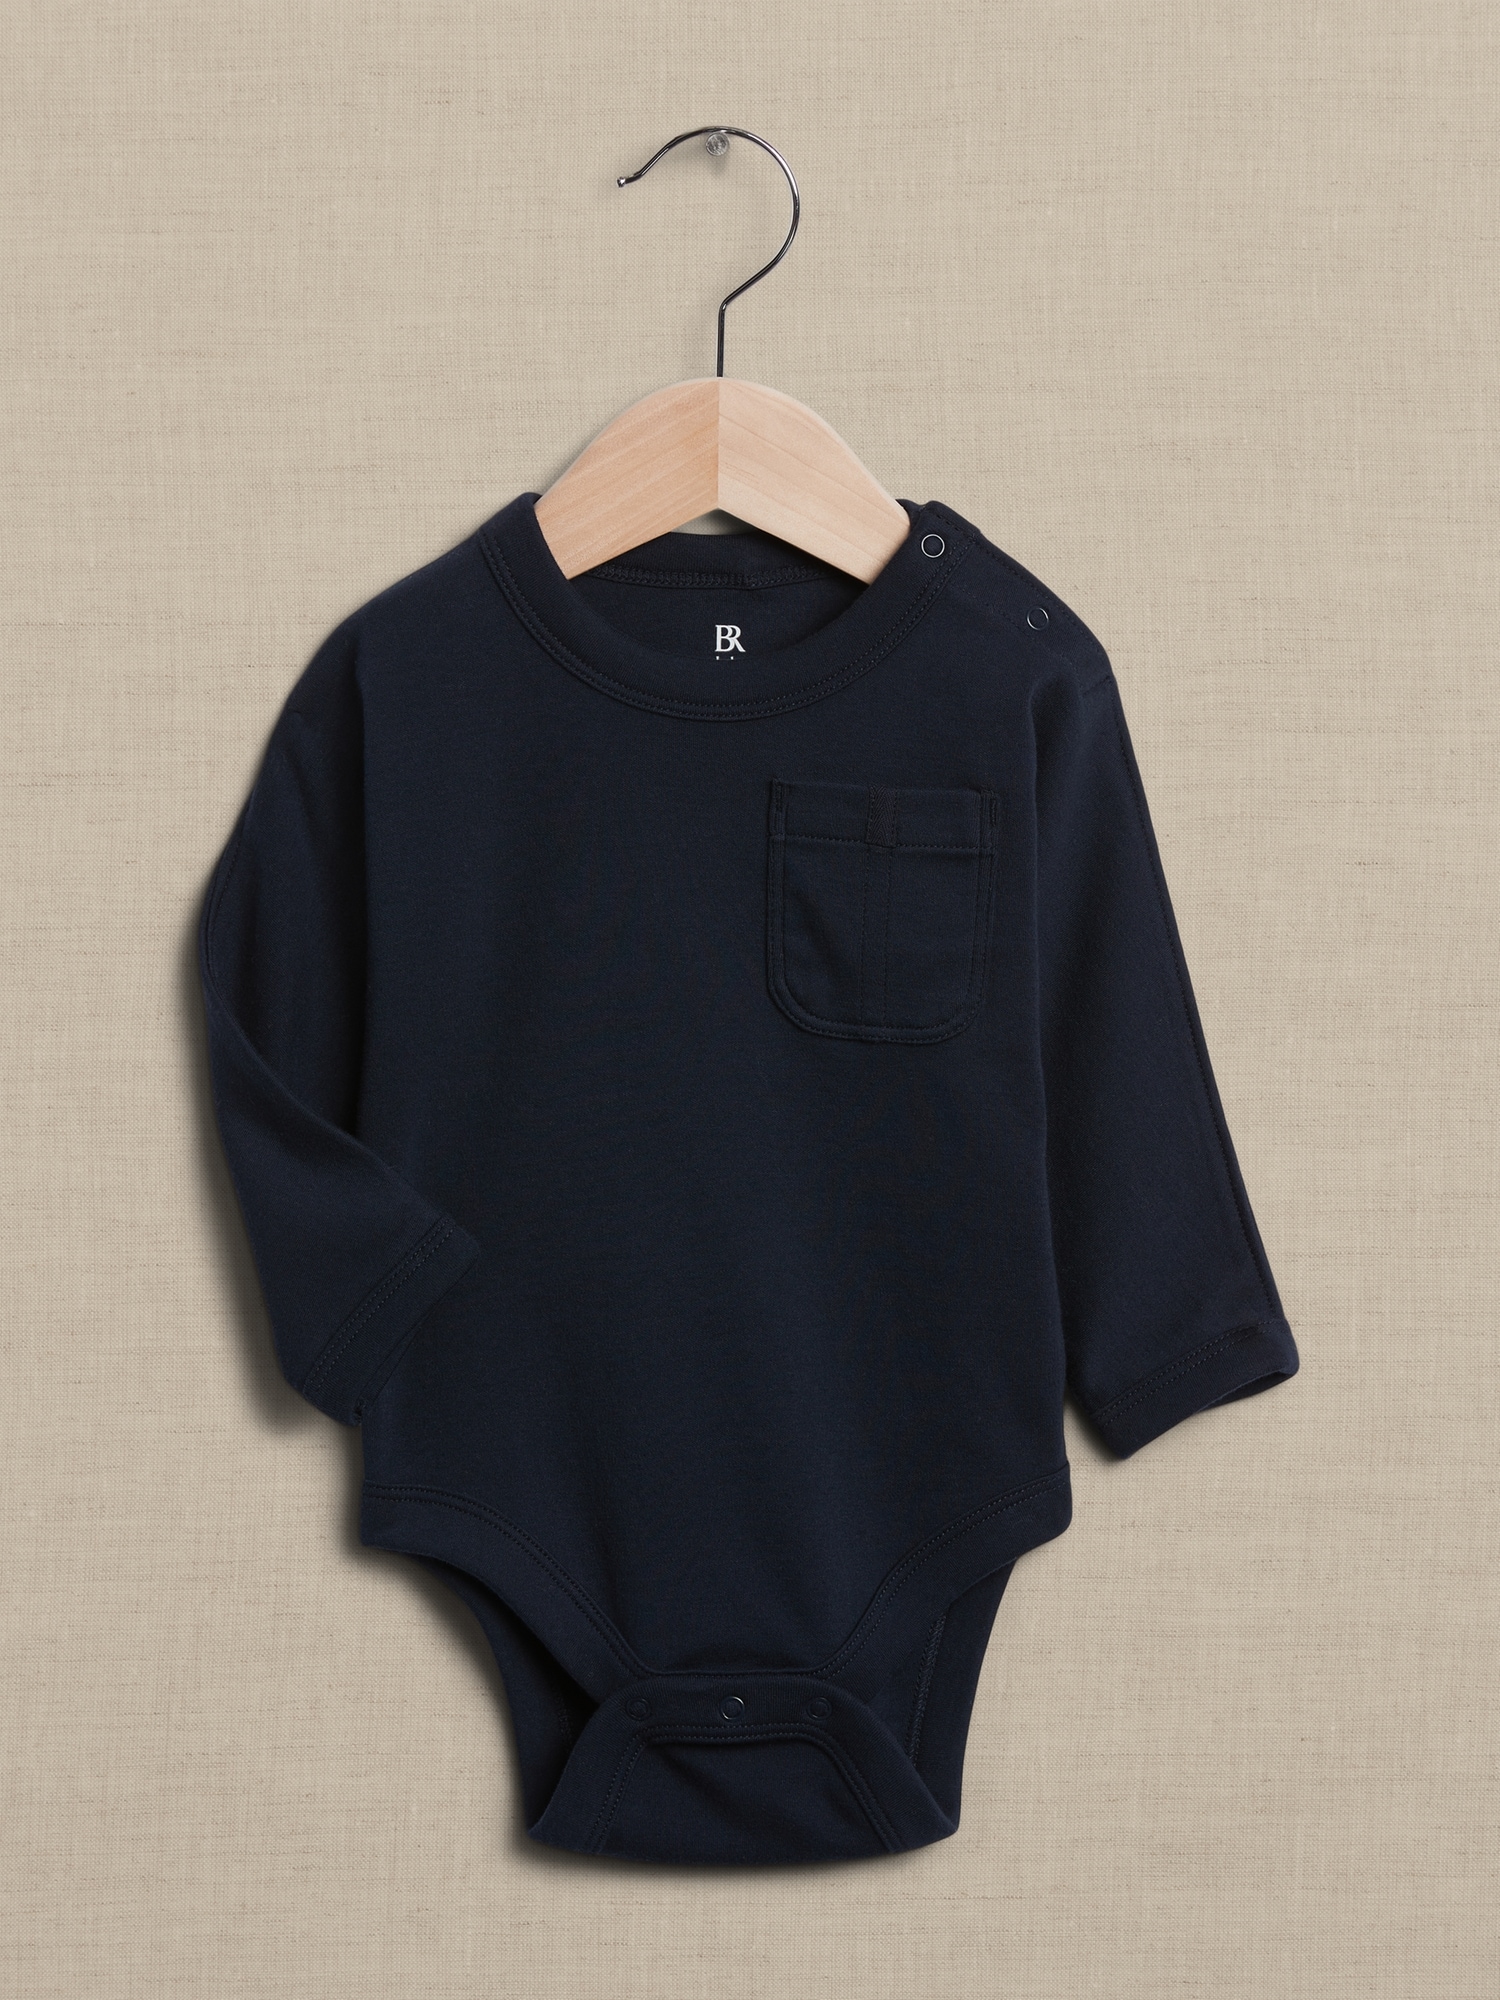 Banana Republic Essential SUPIMA® Long-Sleeve Bodysuit for Baby blue. 1